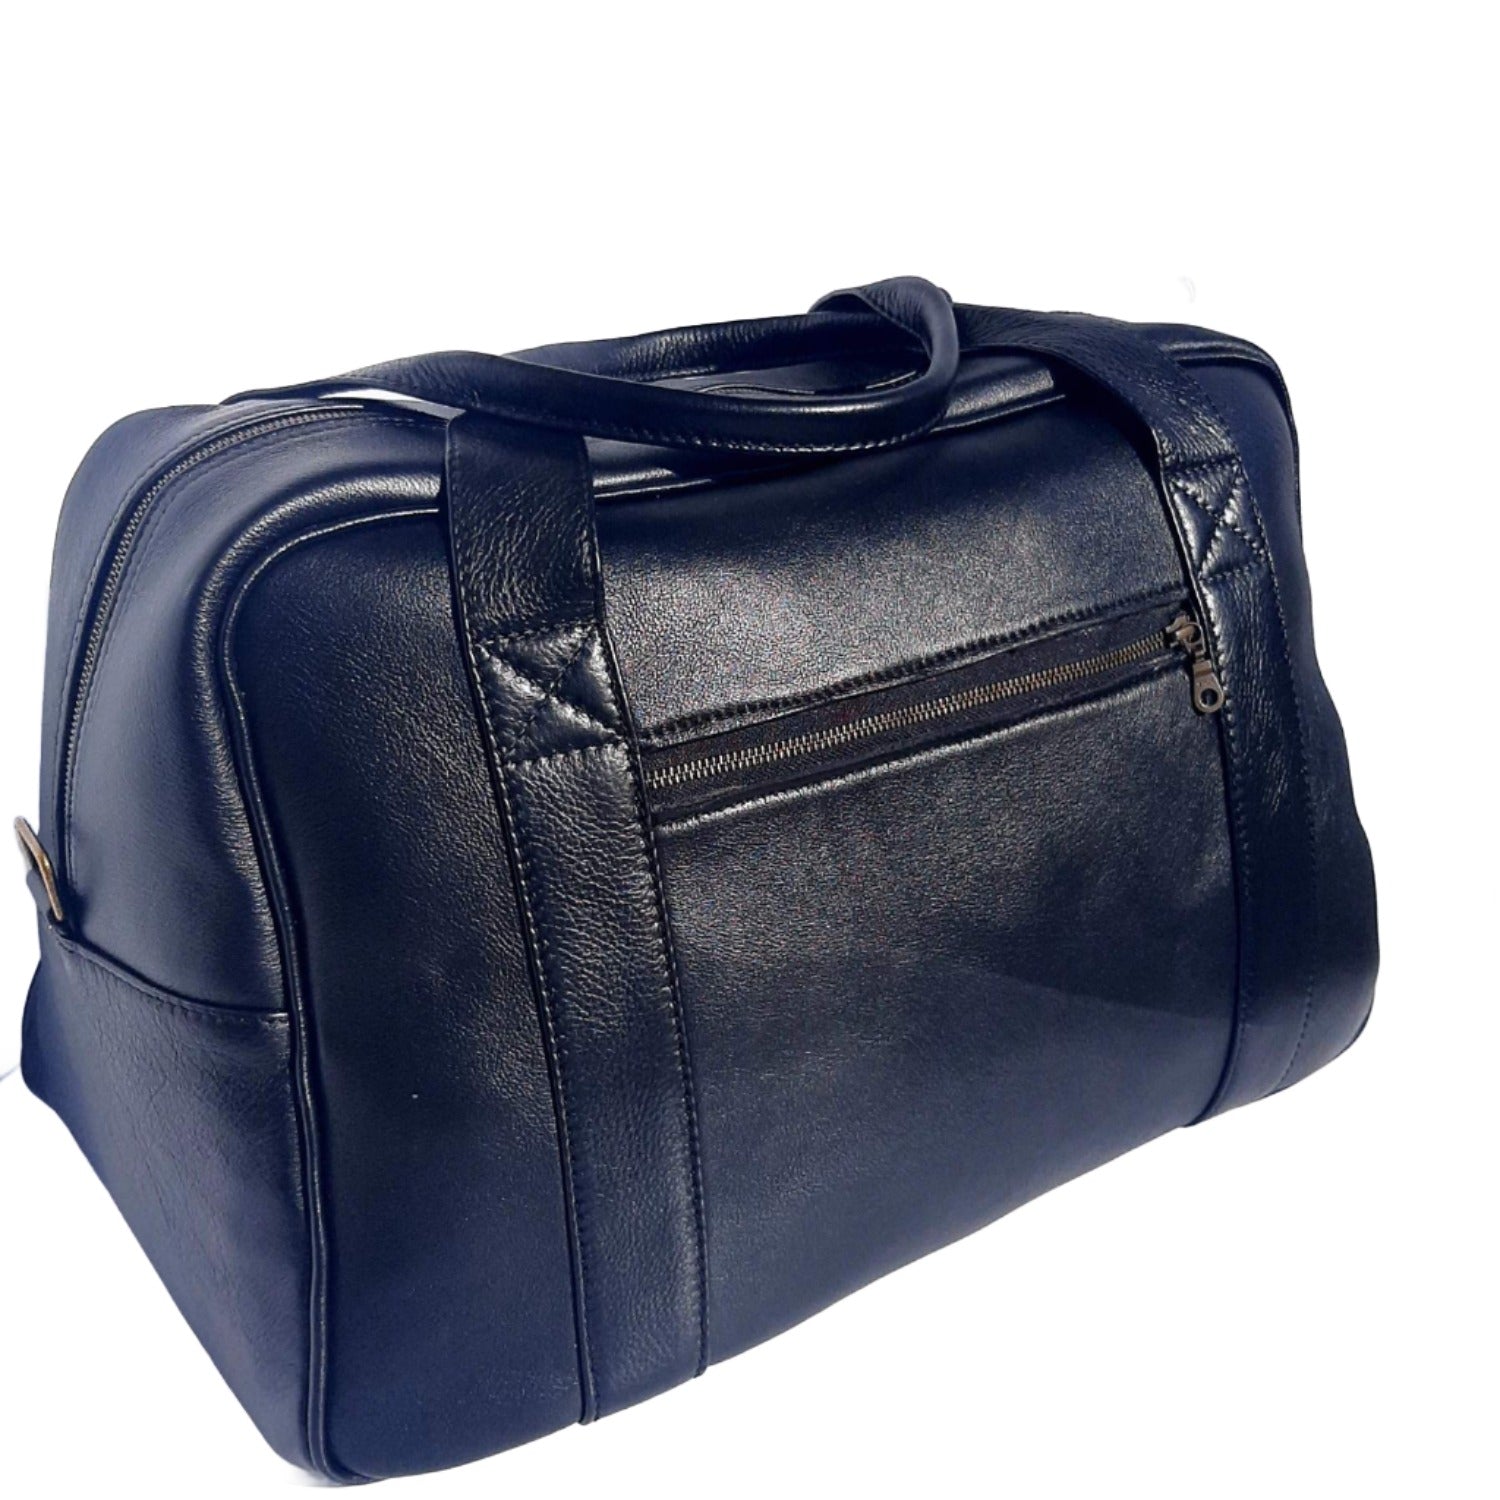 Cape Executive Traveler Bag in dark black colour - Cape Masai Leather 